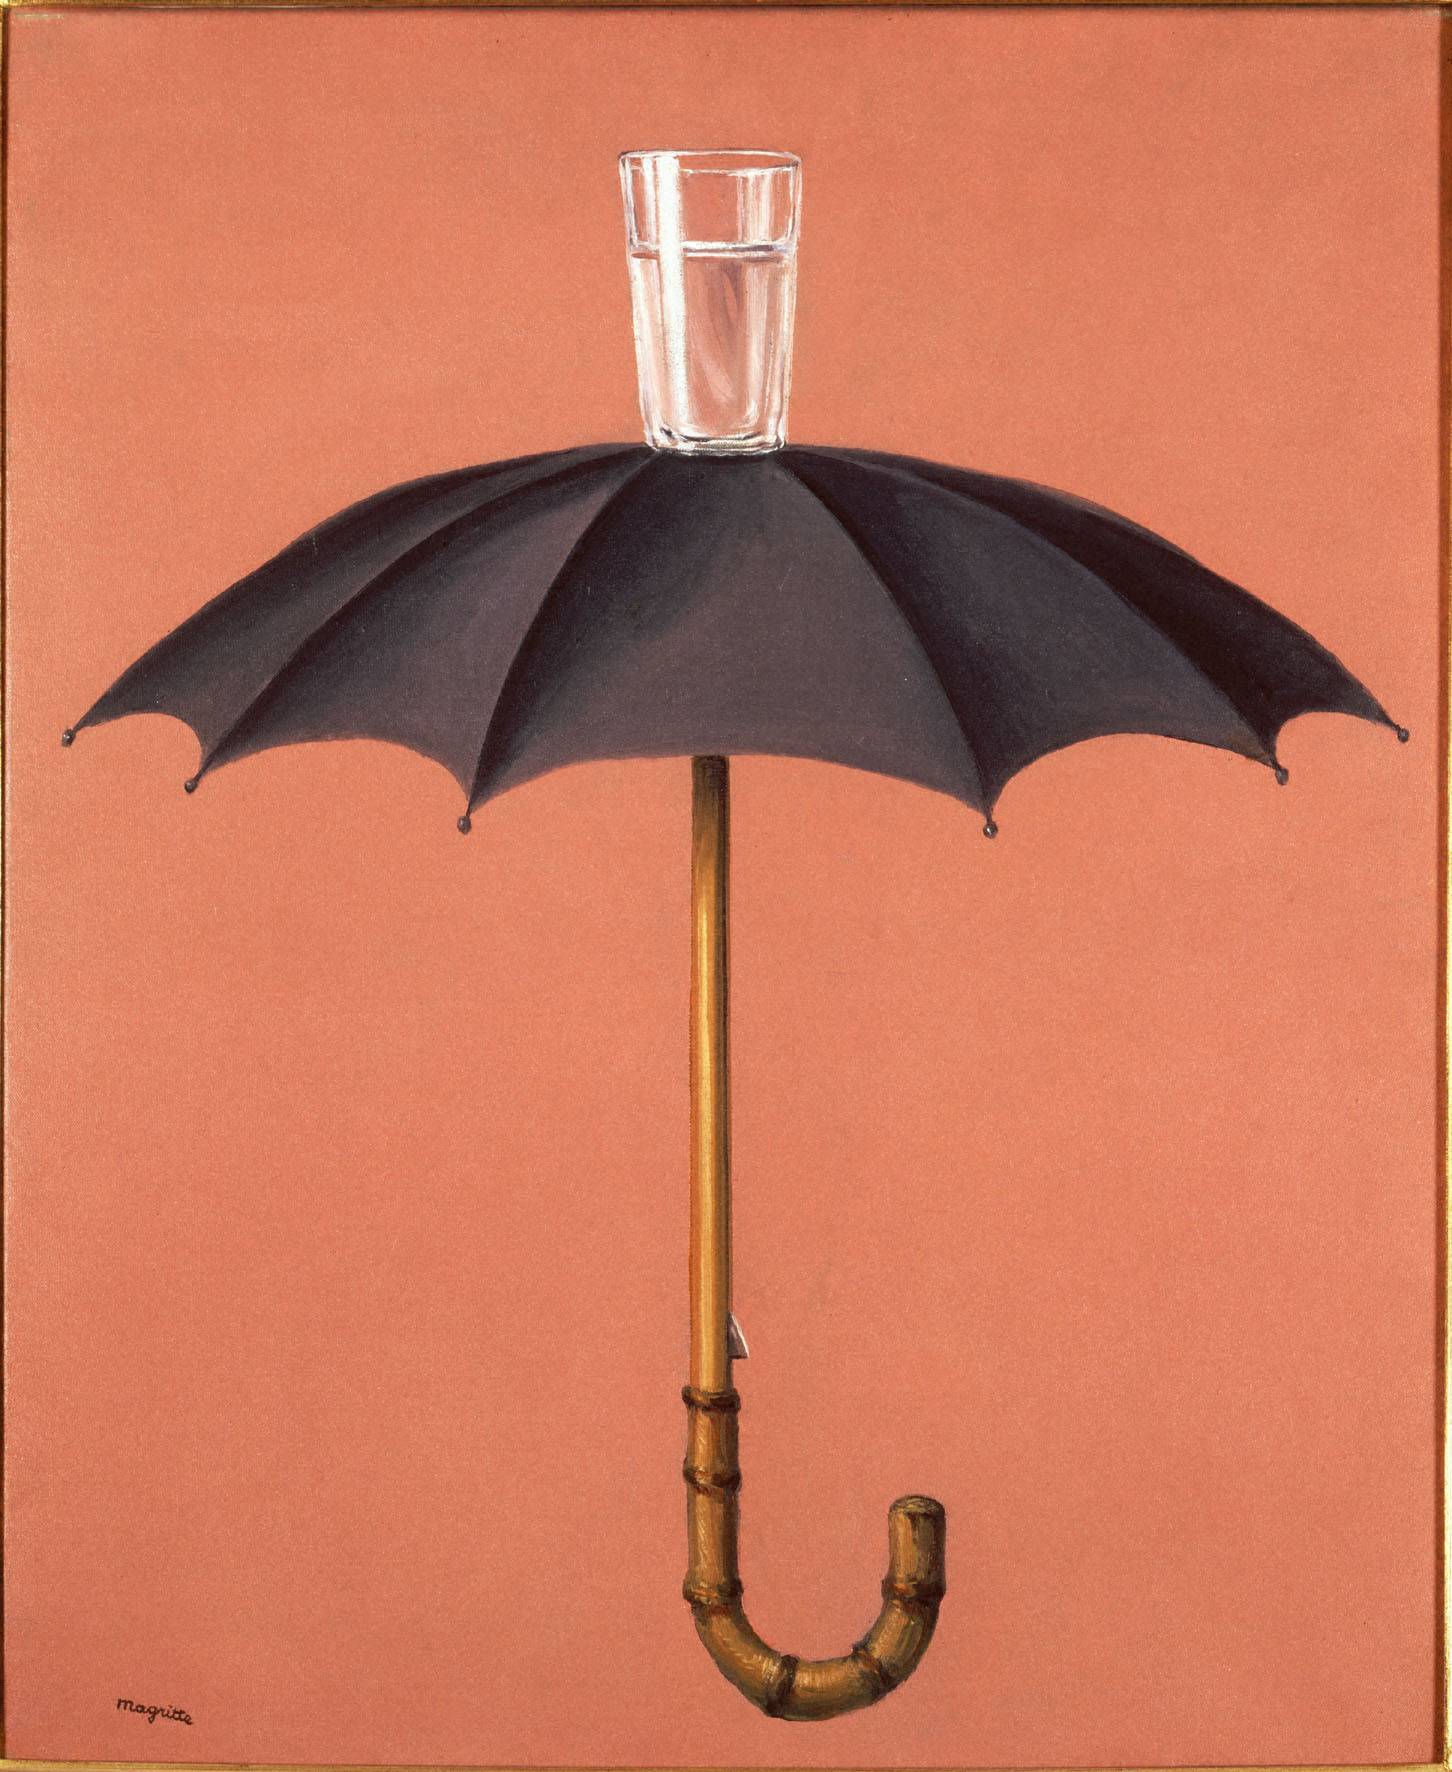 René Magritte, Le vacanze di Hegel, 1958. Olio su tela, 60 x 50 cm, collezione privata © Adagp, Parigi 2016 - Photothèque R. Magritte - Banque d’Images, Adagp, Parigi 2016. Courtesy Centre Pompidou